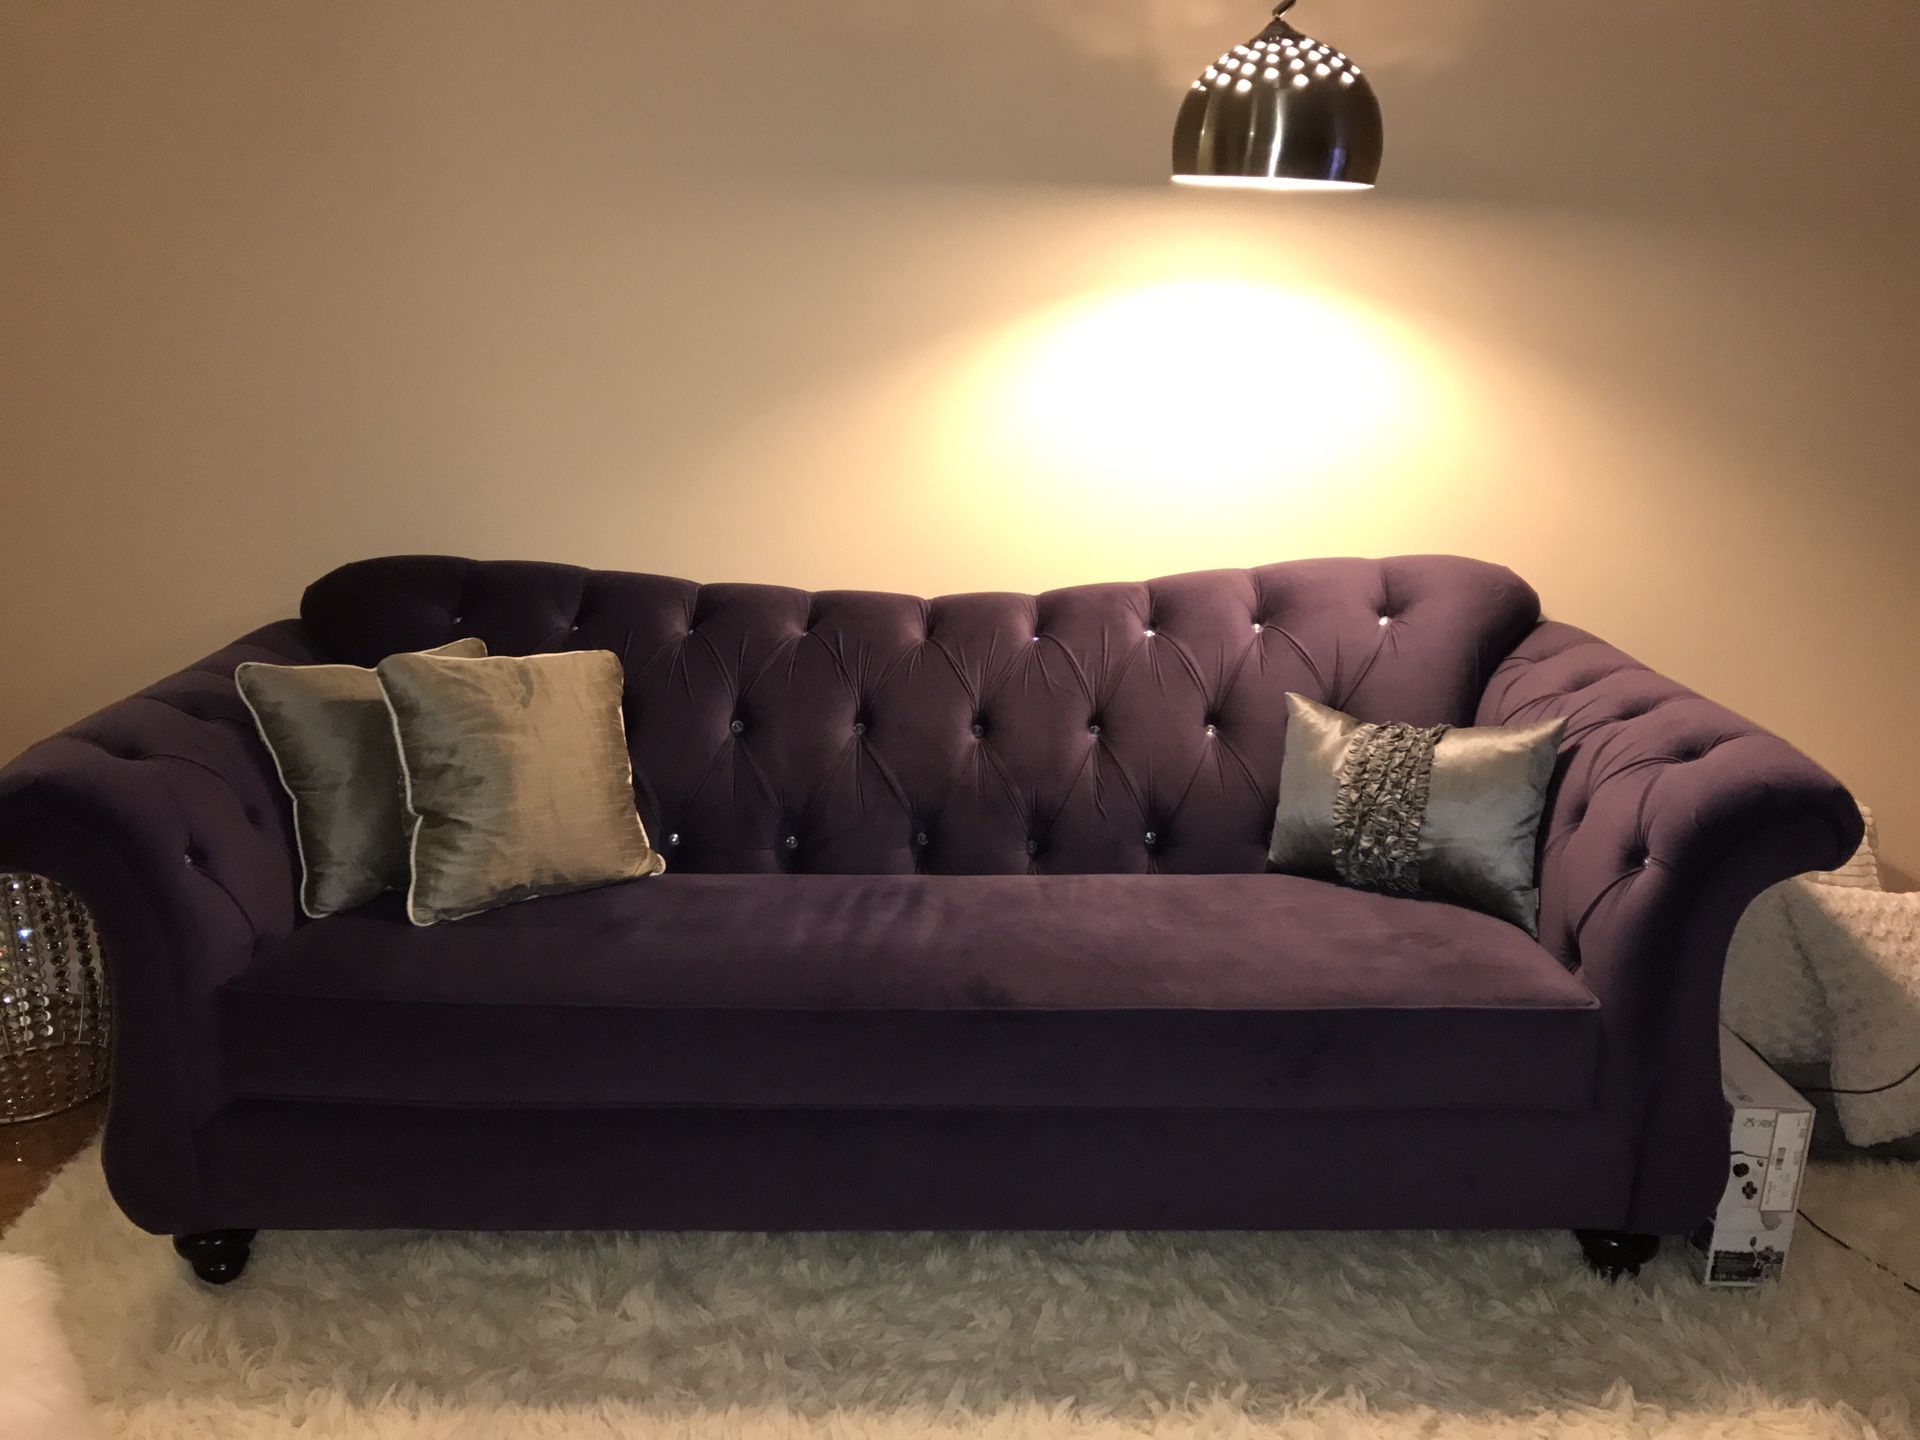 96-inch purple microfiber sofa/couch $400 (price reduced)